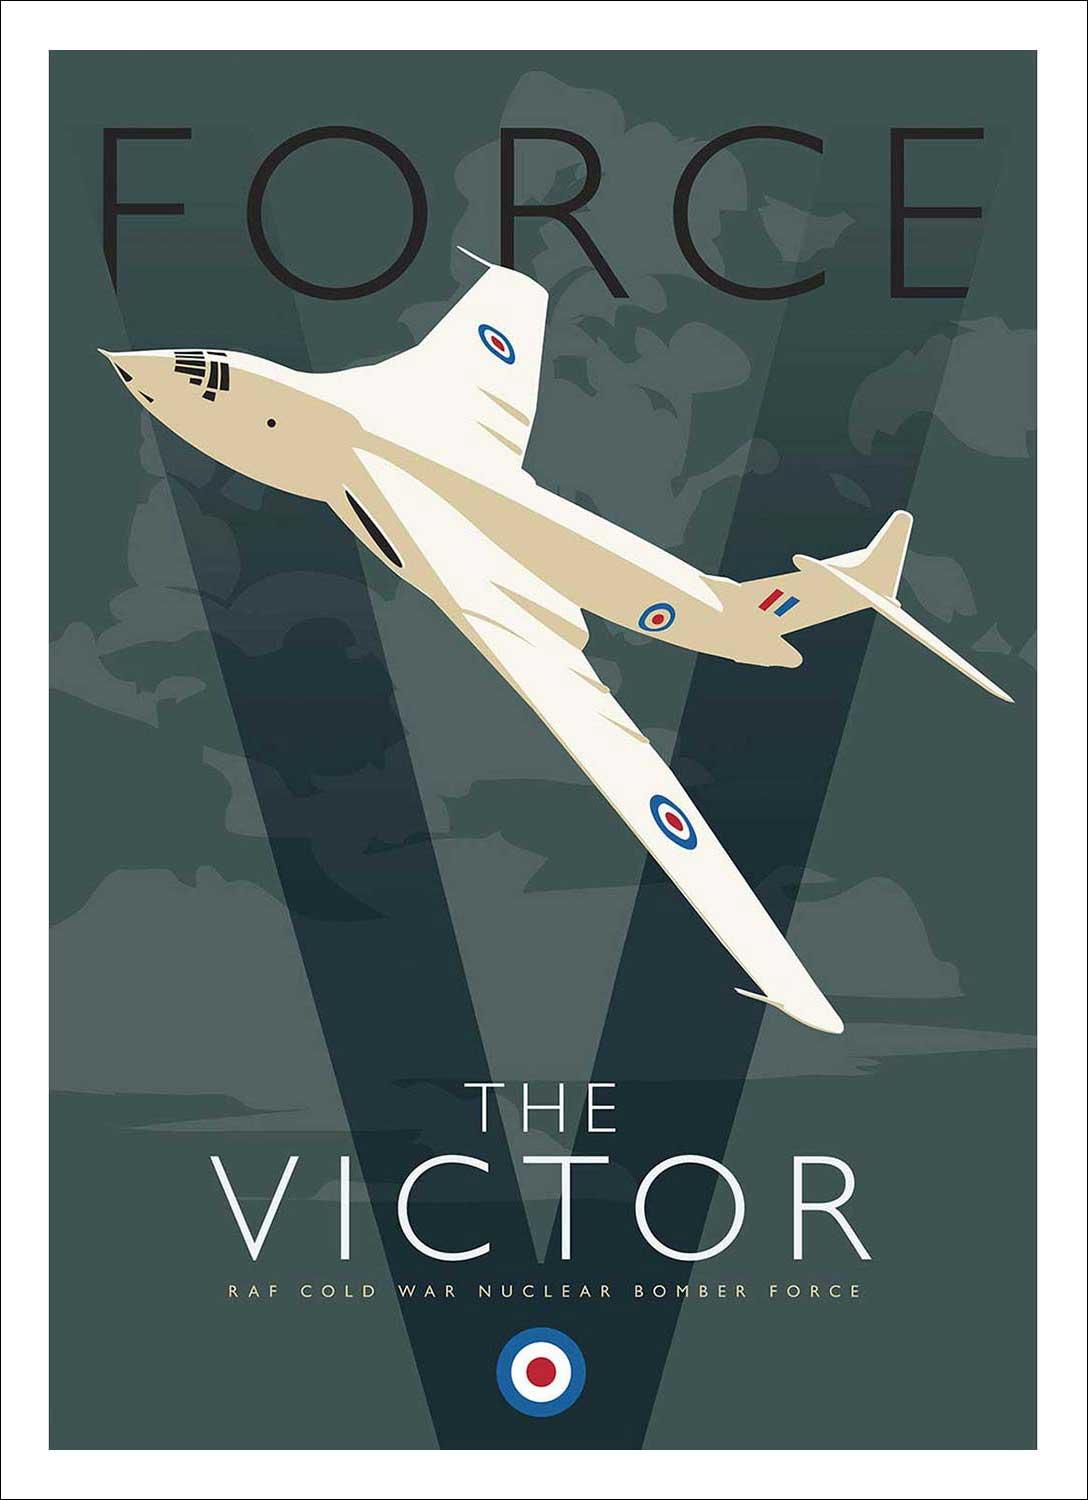 The Victor Art Print from an original illustration by artist Peter McDermott